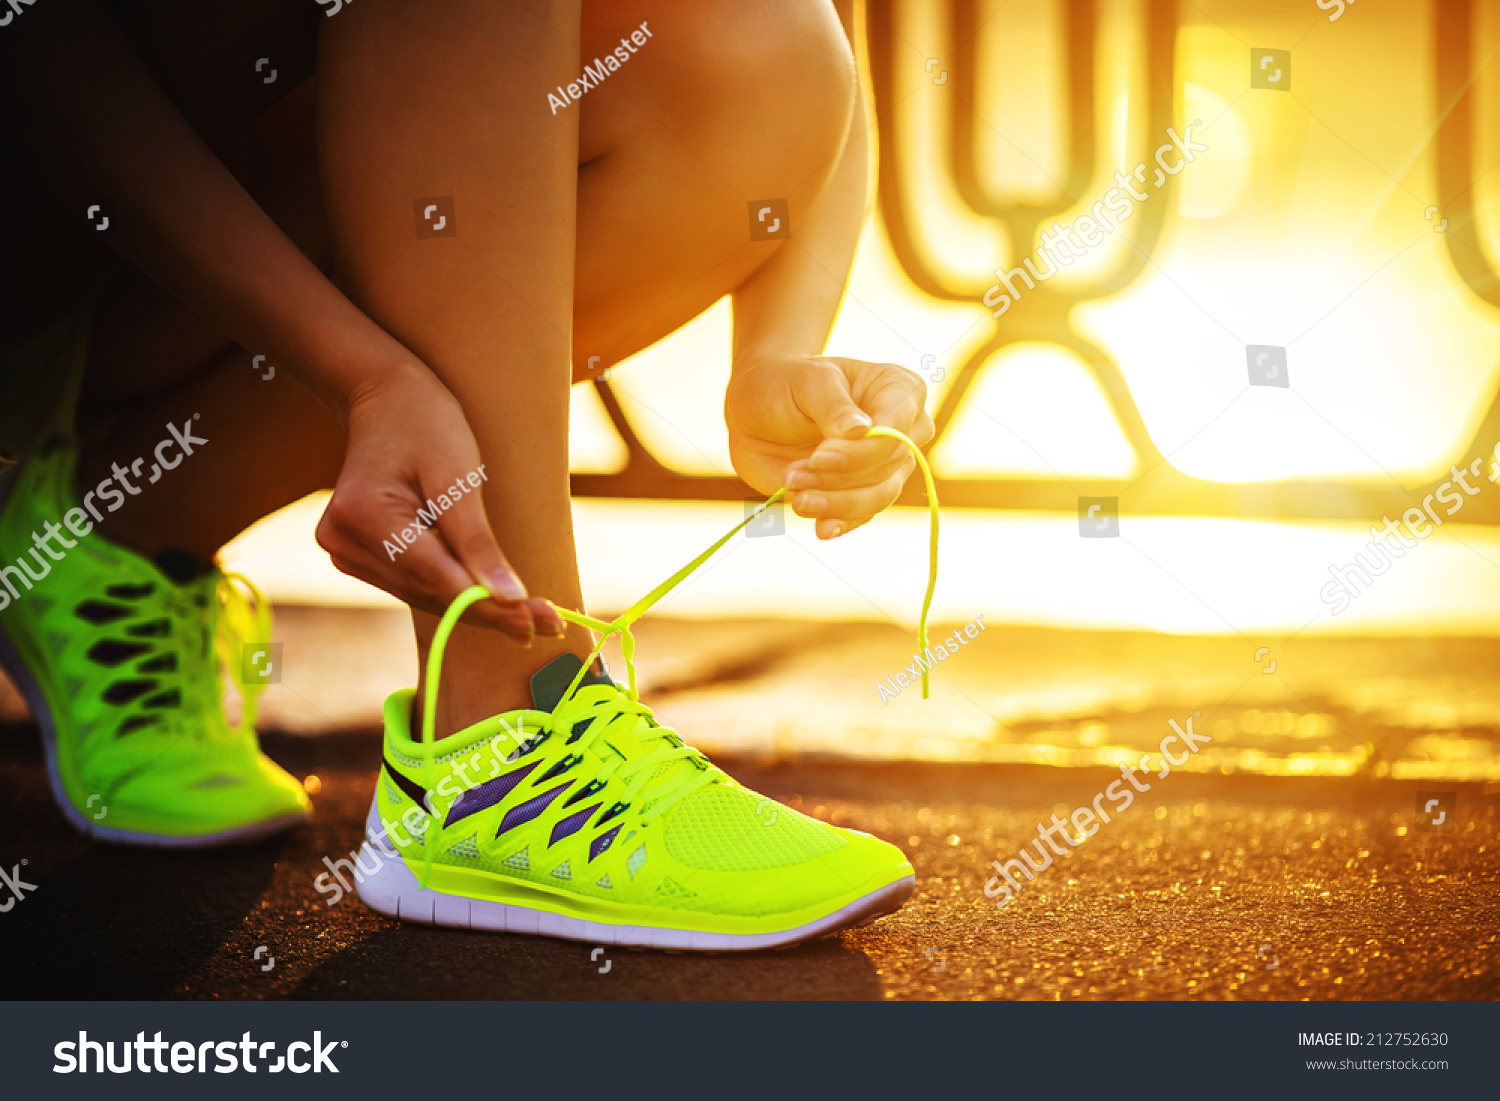 sepatuwani-taterbaru: Athletes Running Shoes Images